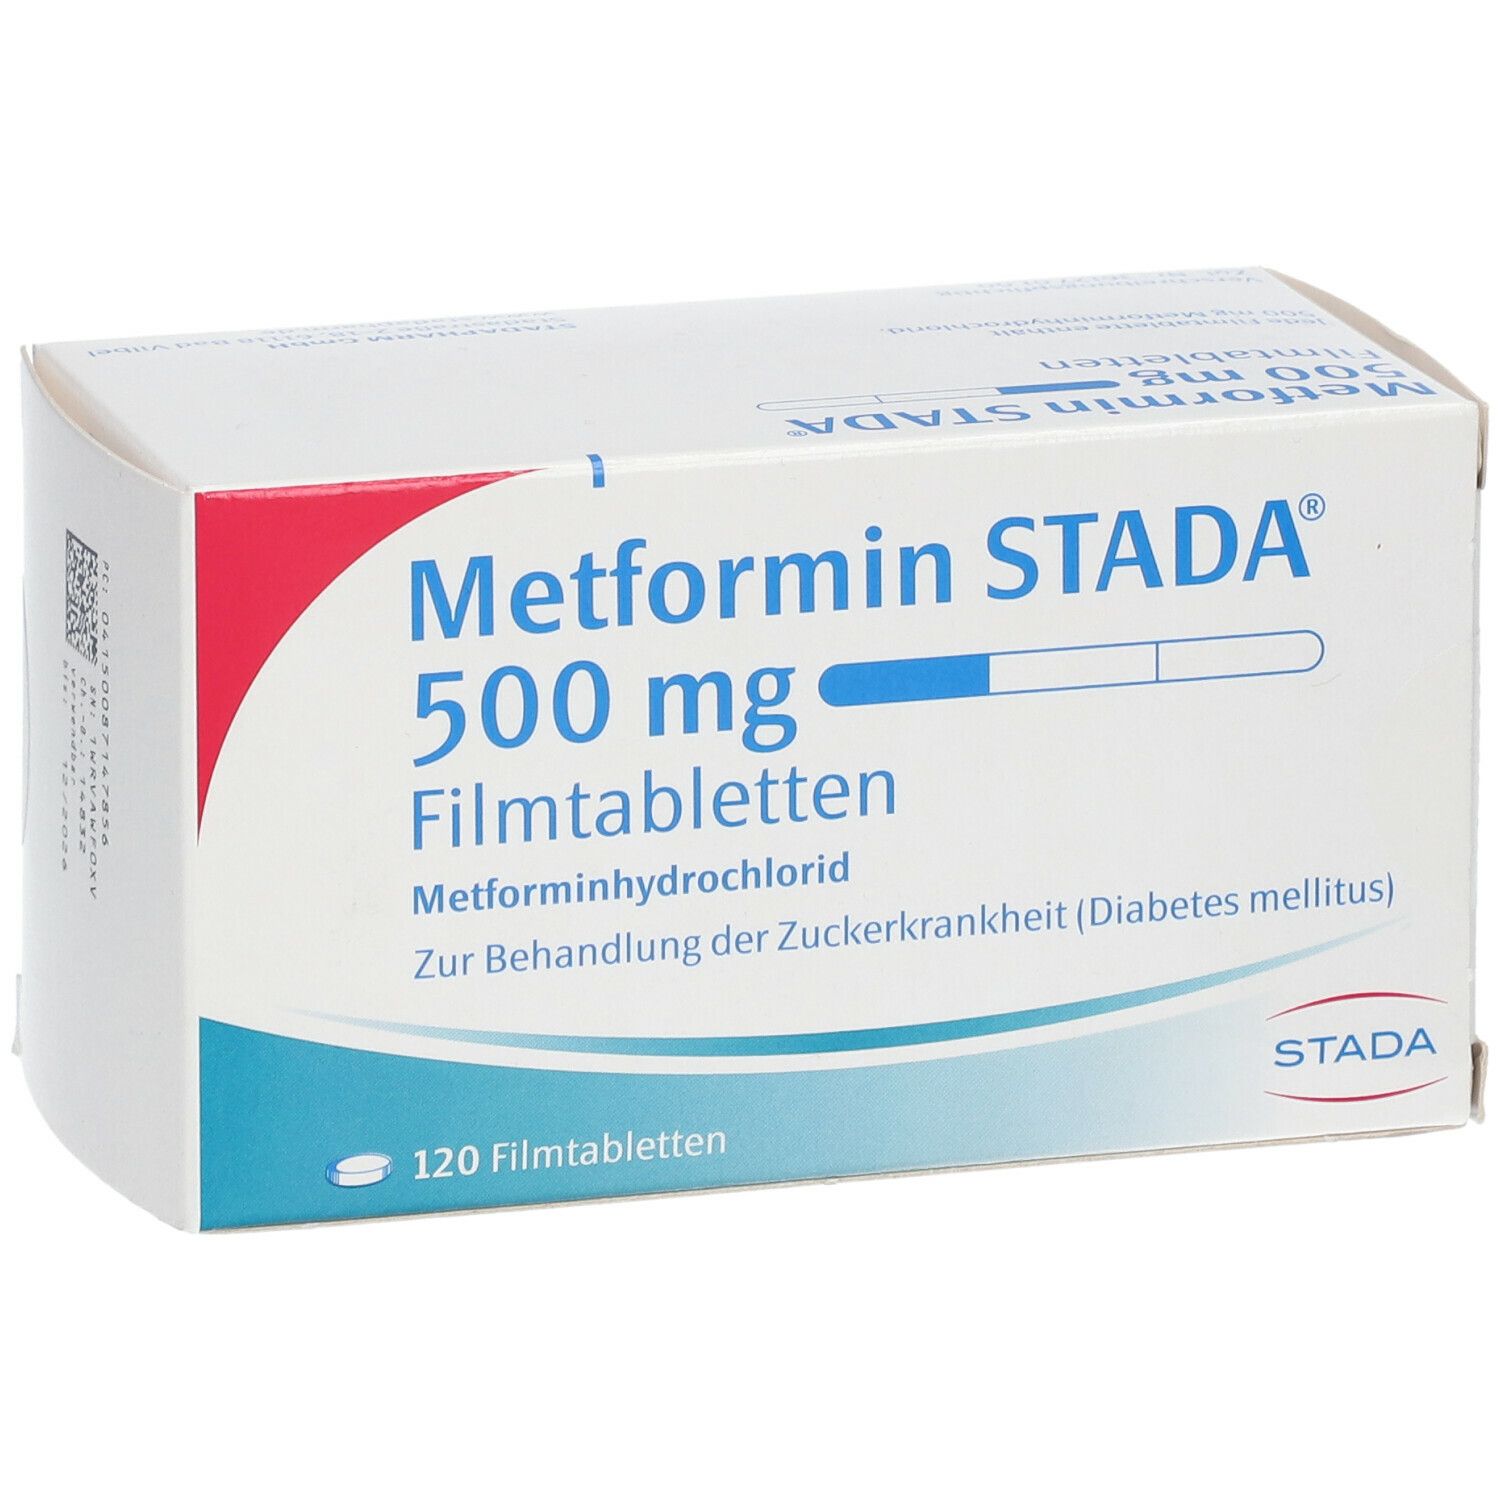 Metformin STADA® 500 mg